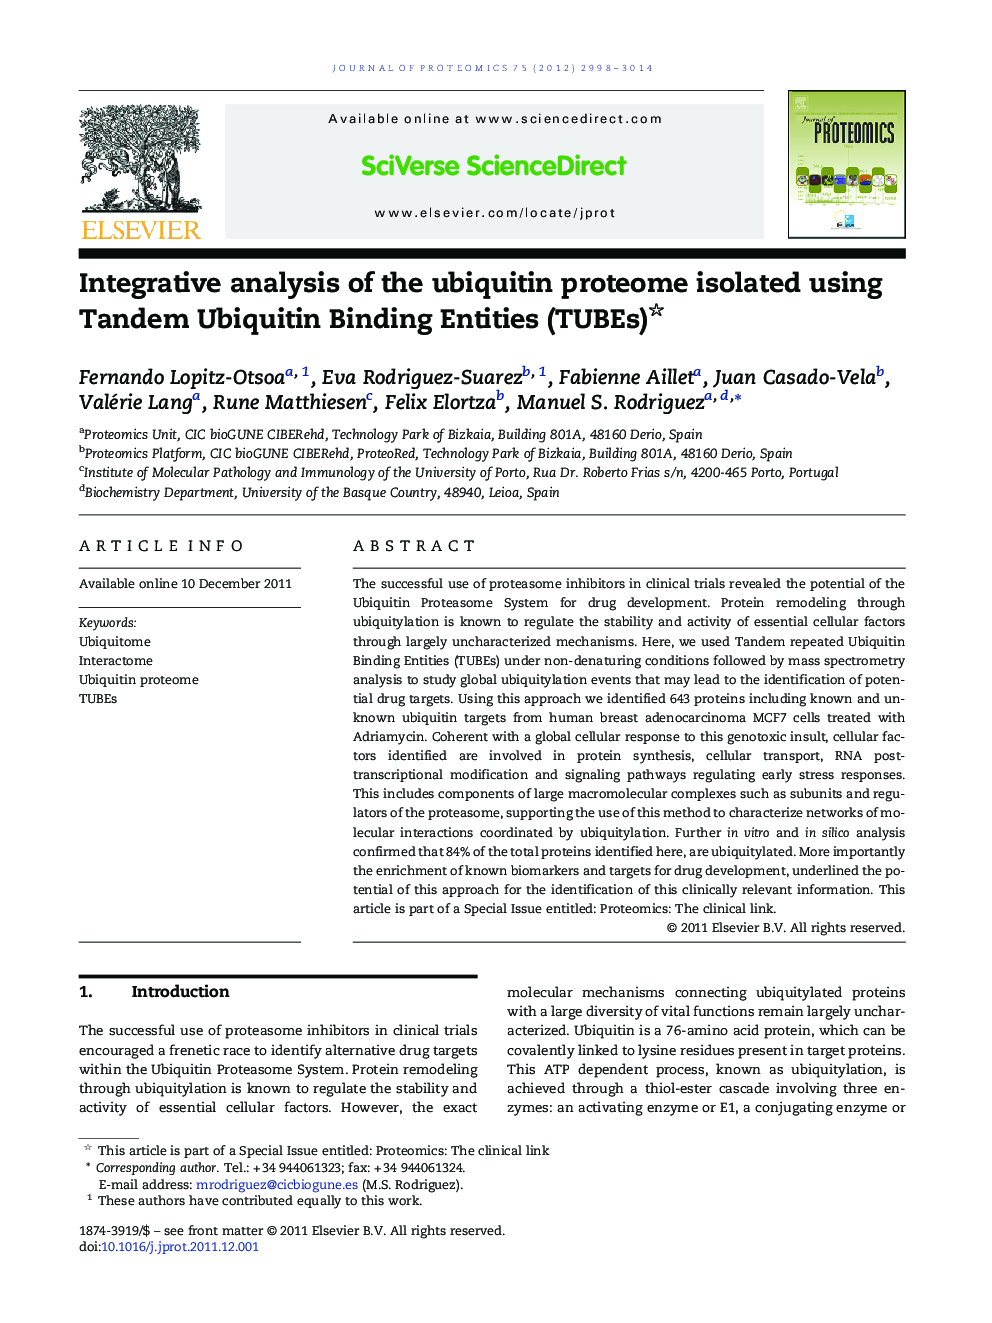 Integrative analysis of the ubiquitin proteome isolated using Tandem Ubiquitin Binding Entities (TUBEs) 